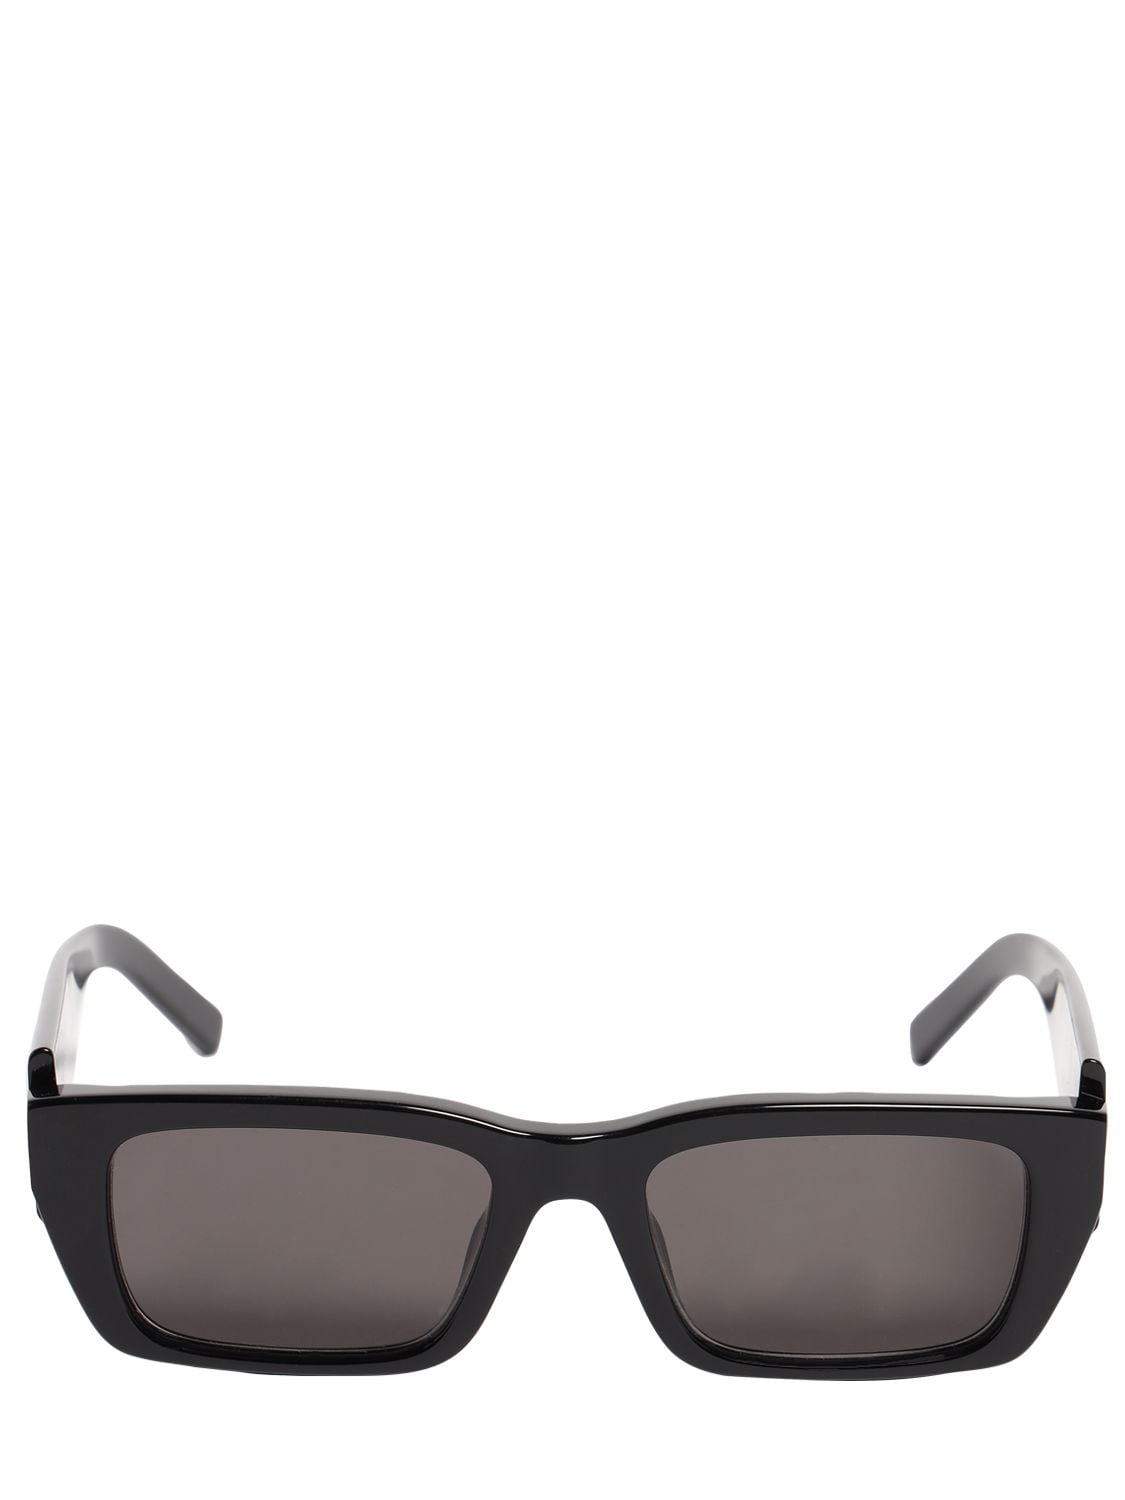 Image of Palm Squared Acetate Sunglasses